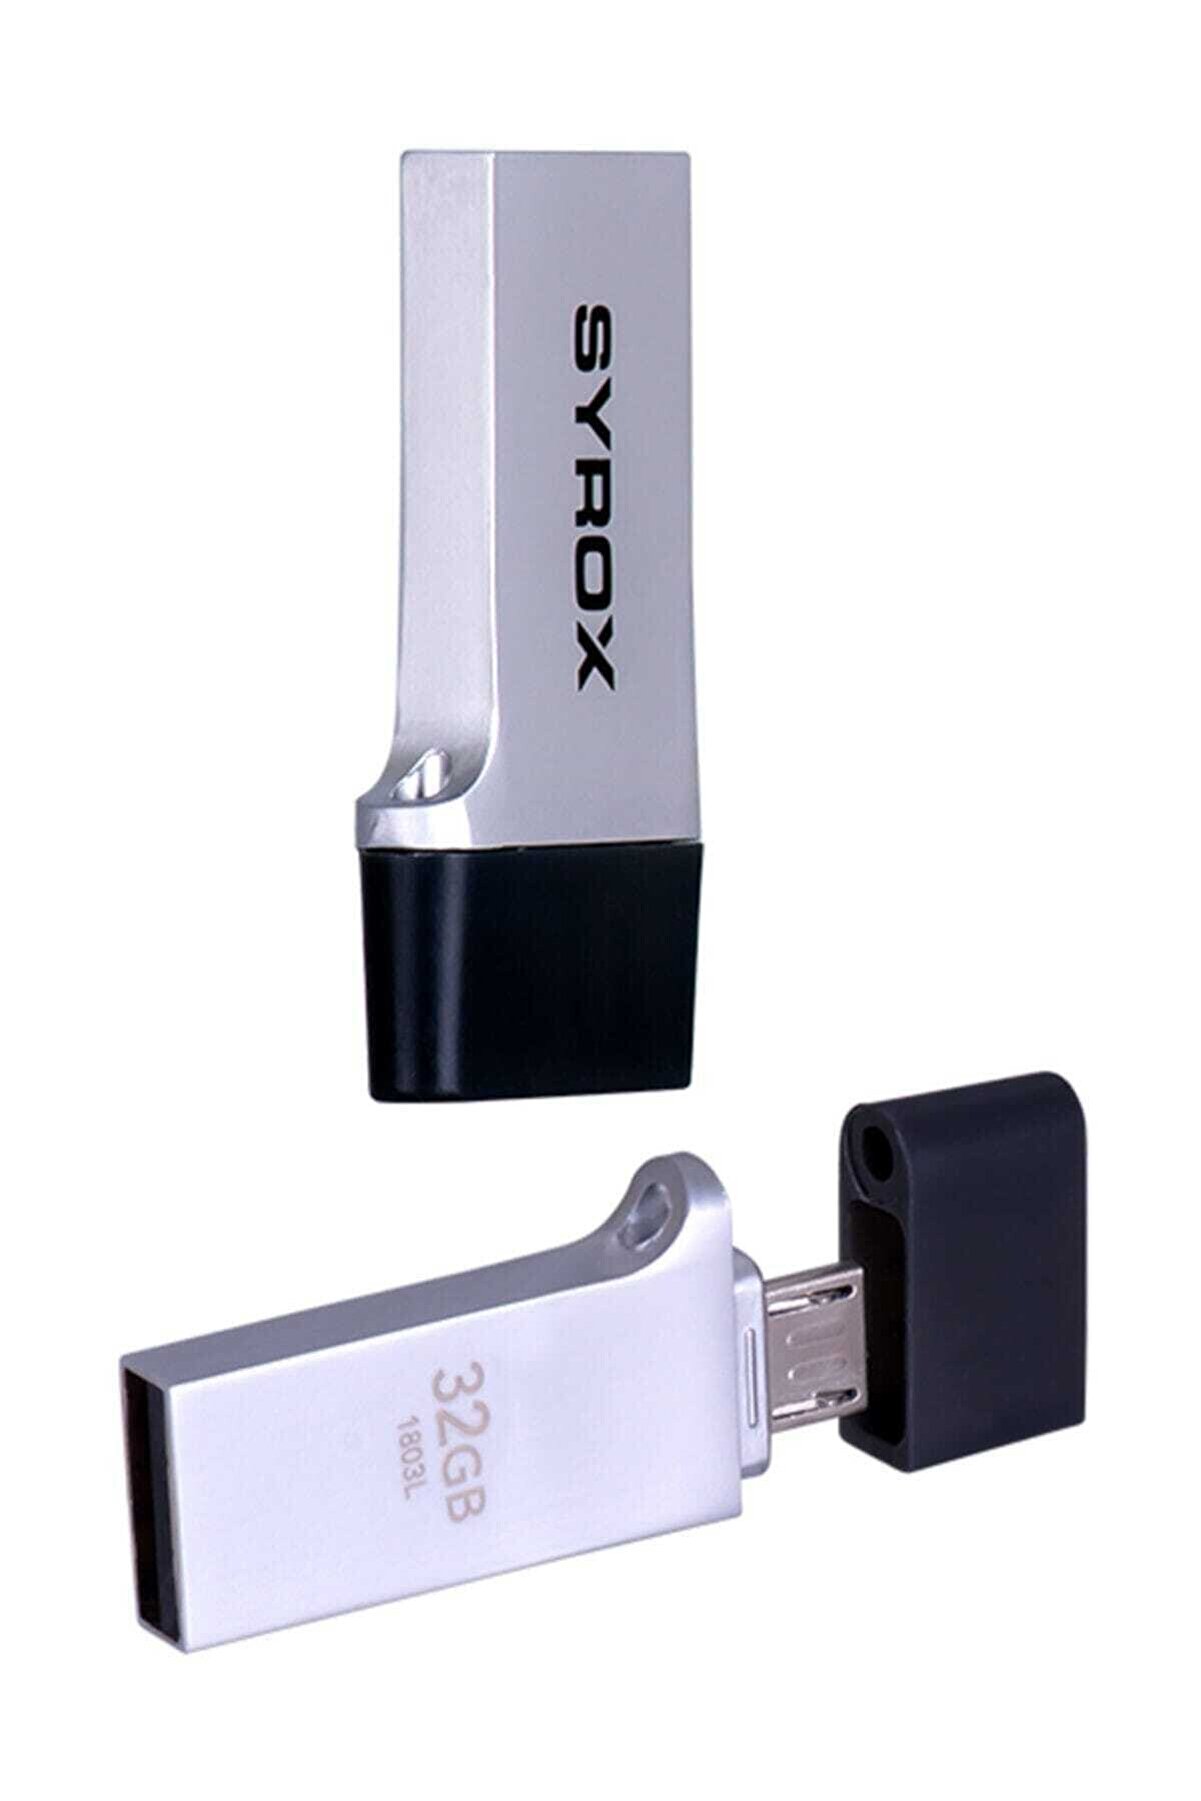 Syrox Otg 32 Gb Micro Usb Dual Otg Flash Bellek